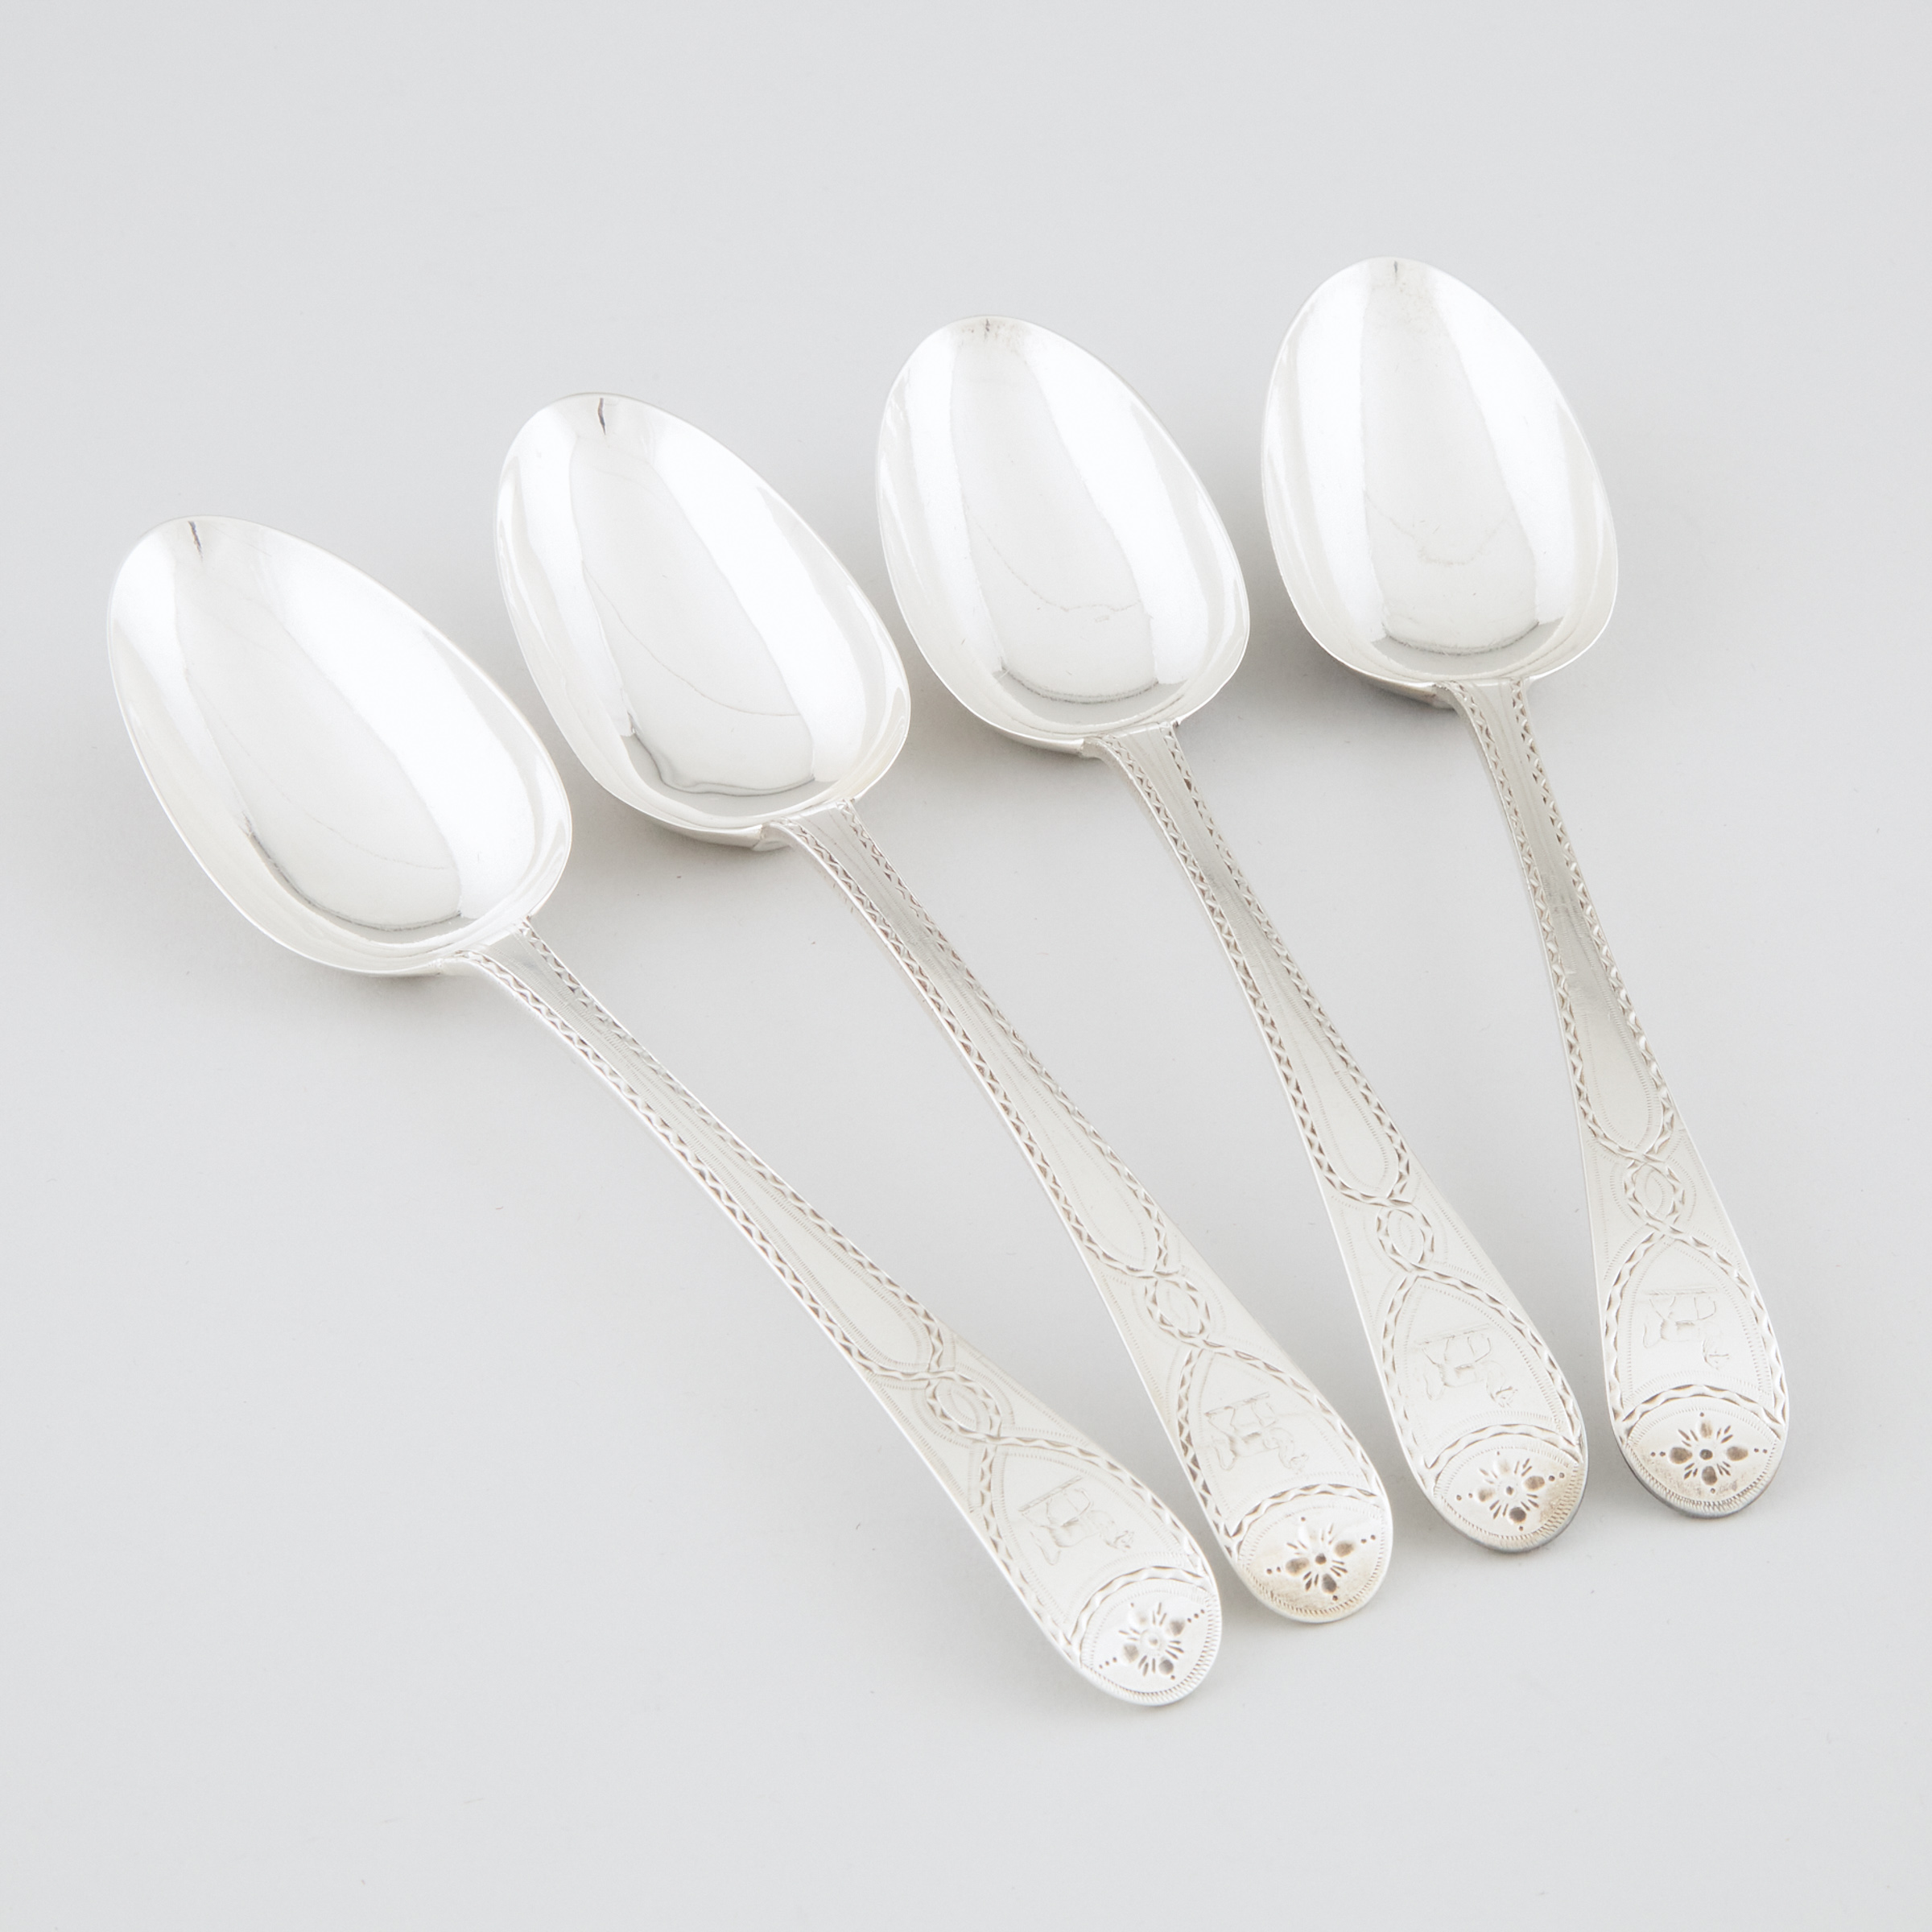 Four George III Silver Bright-Cut Table Spoons, Hester Bateman, London, 1781